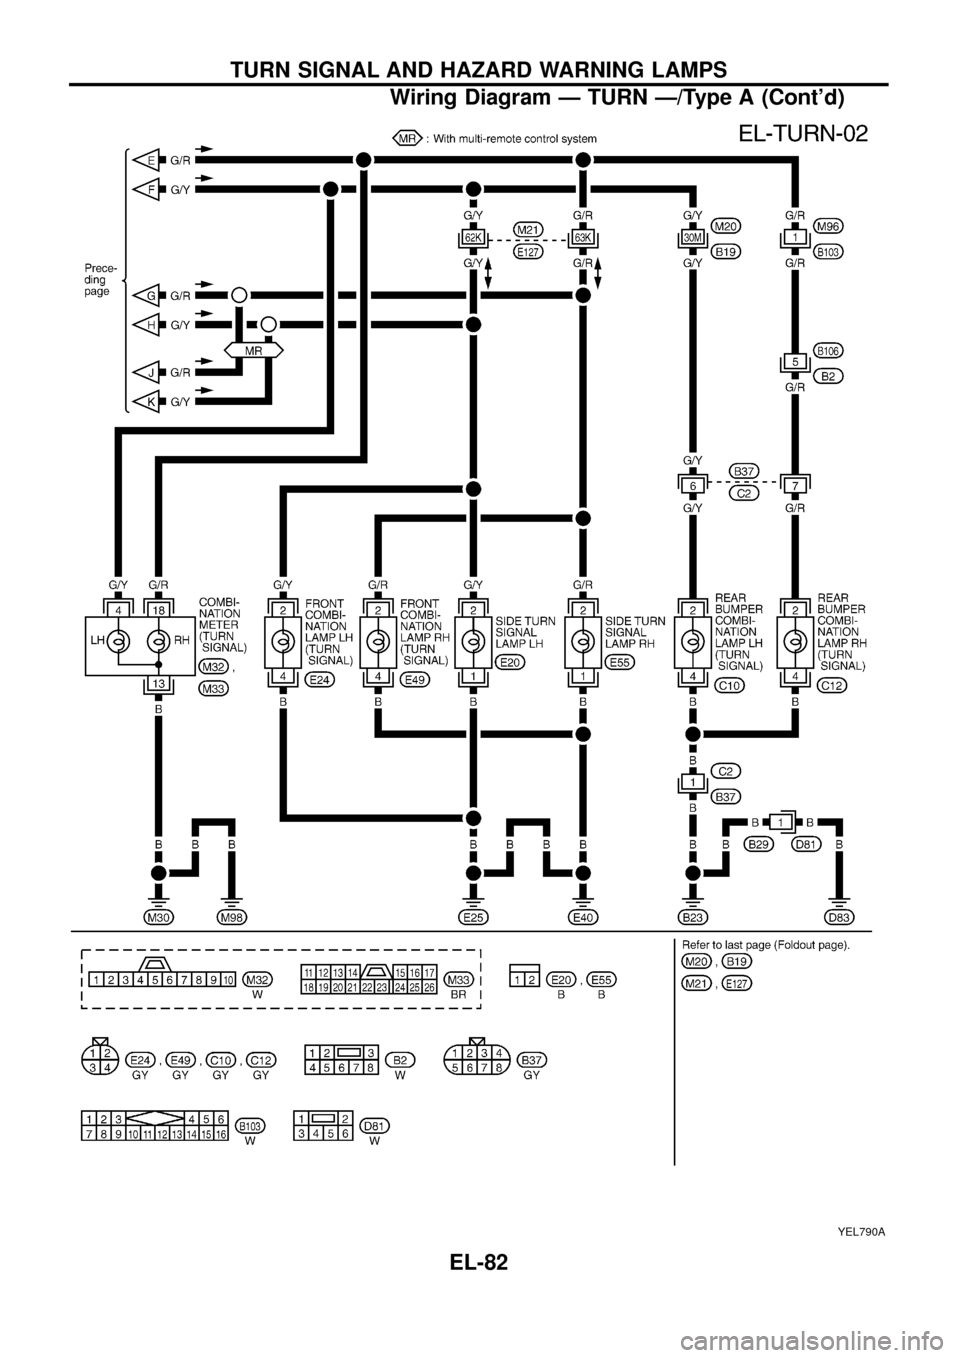 NISSAN PATROL 1998 Y61 / 5.G Electrical System Manual Online YEL790A
TURN SIGNAL AND HAZARD WARNING LAMPS
Wiring Diagram Ð TURN Ð/Type A (Contd)
EL-82 